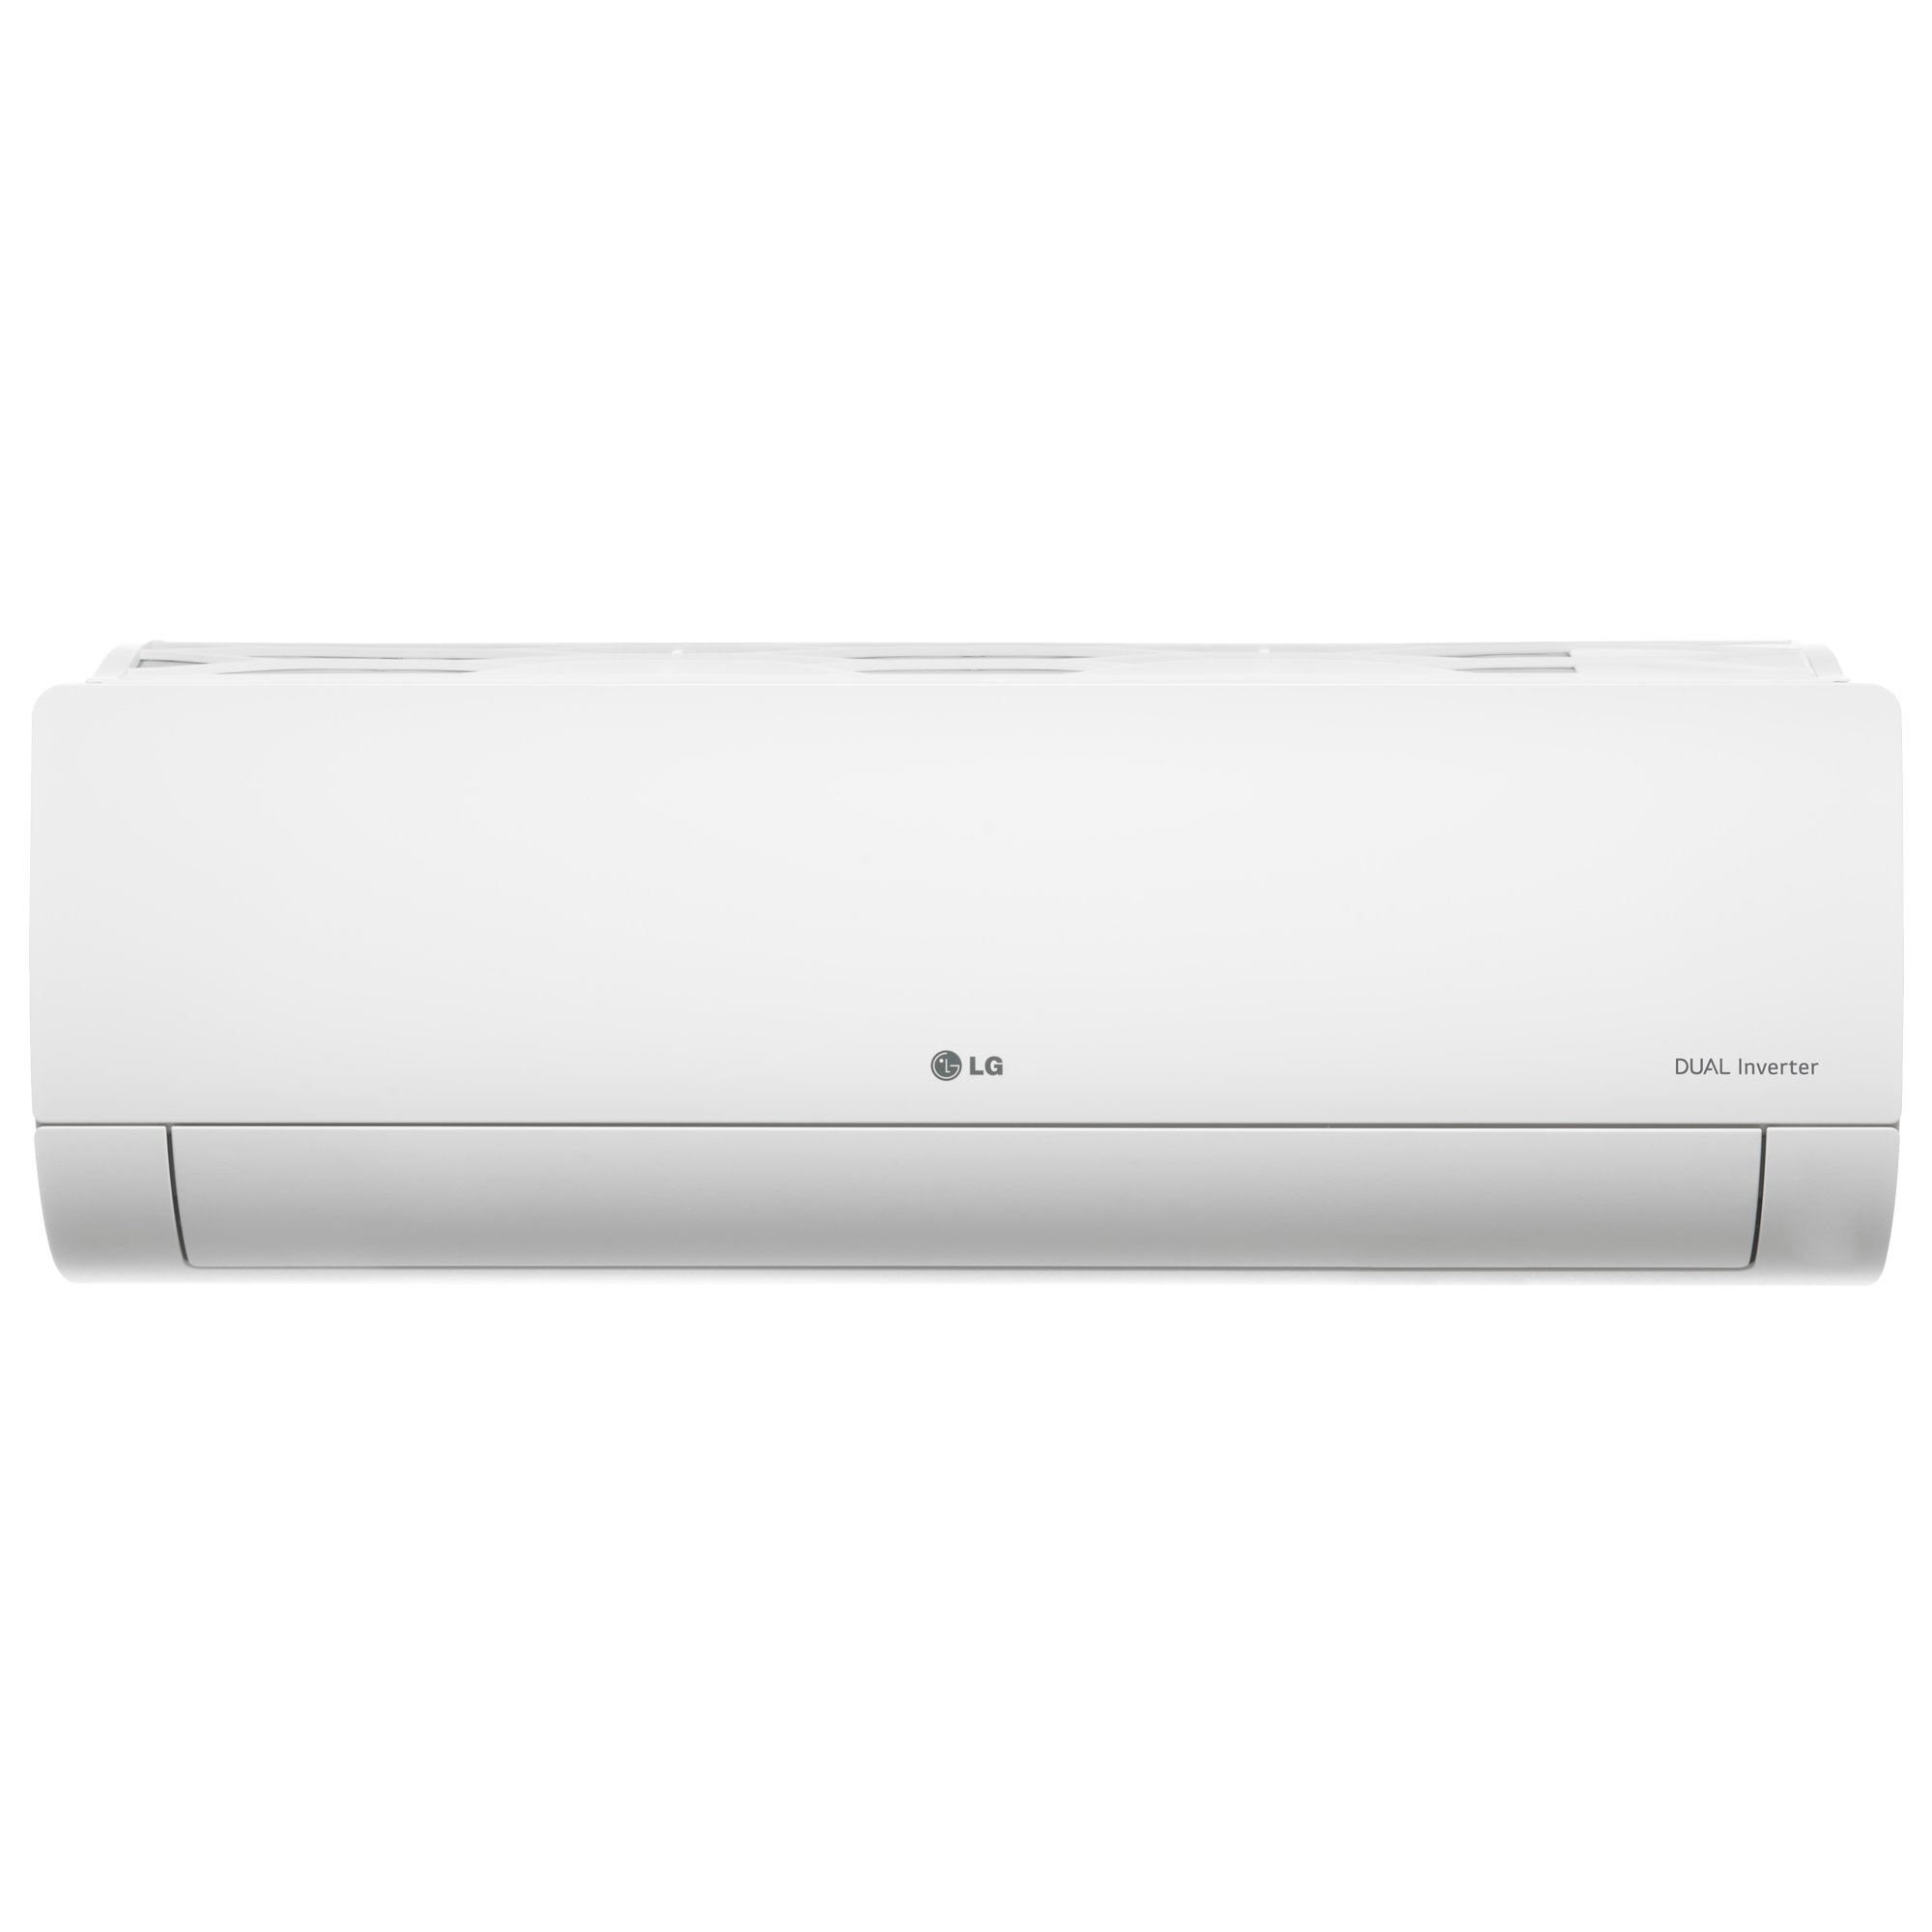 LG 1 Ton 5 Star Inverter Split AC (Air Purification Filter, Copper Condenser, MS-Q12ANZA, White)_1